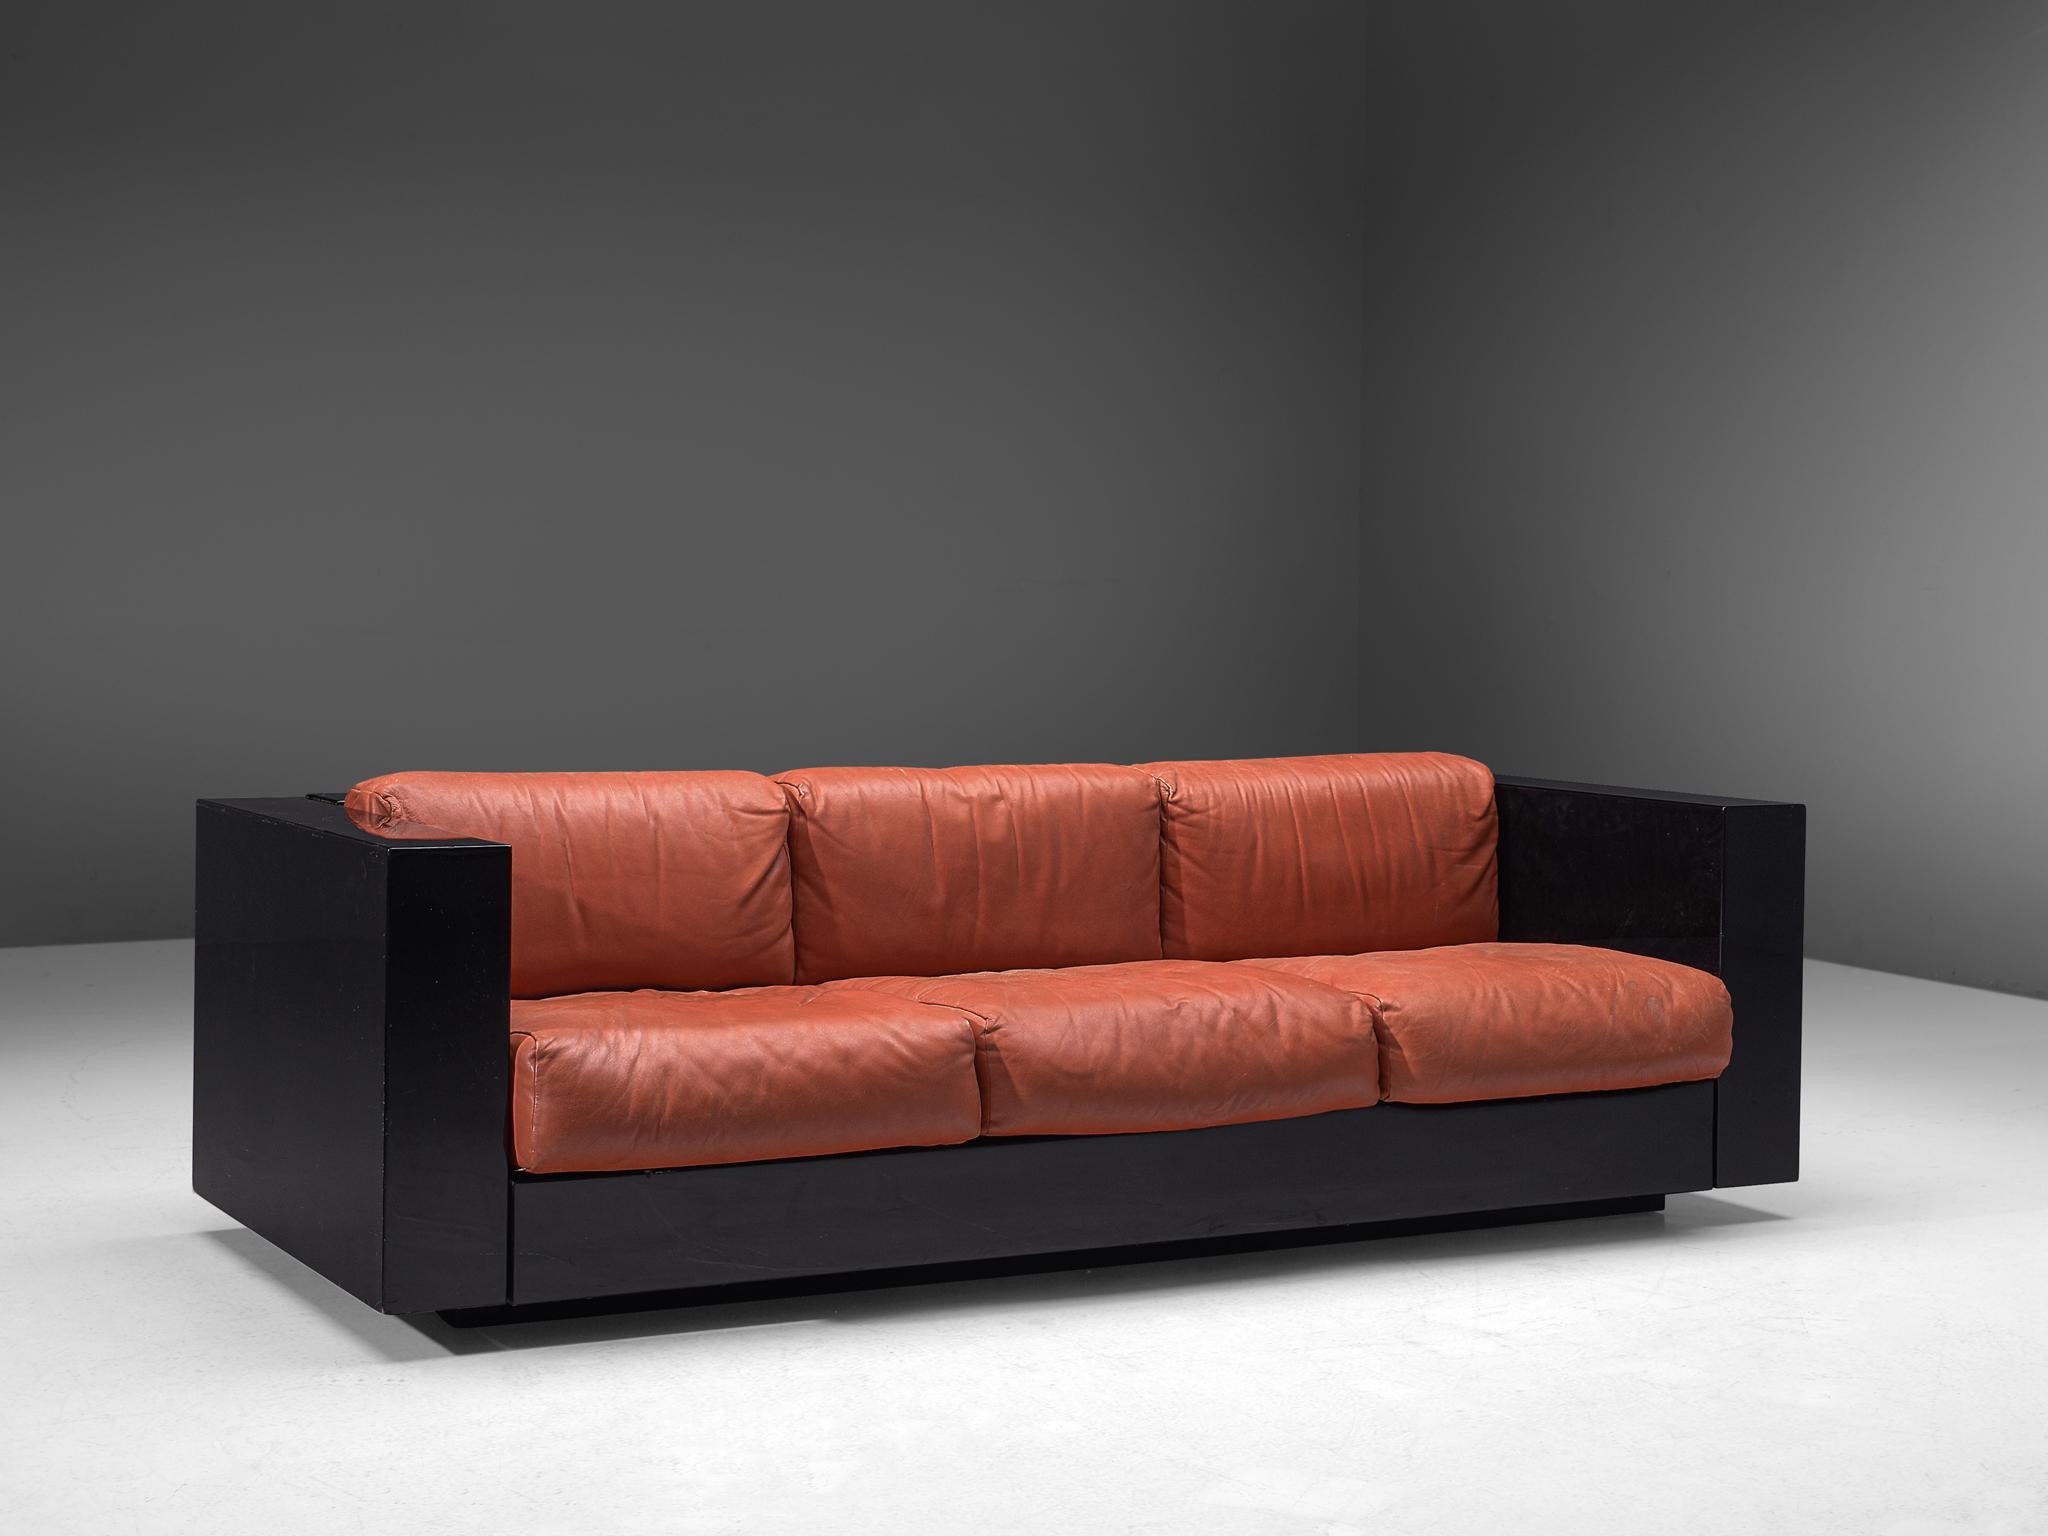 Massimo and Lella Vignelli for Poltronova, 'Saratoga' three-seat sofa, polyester lacquer and red leather, Italy, 1964.

This three-seat sofa named 'Saratoga' is designed by Italian designer couple Lella & Massimo Vignelli. The Vignelli's were known